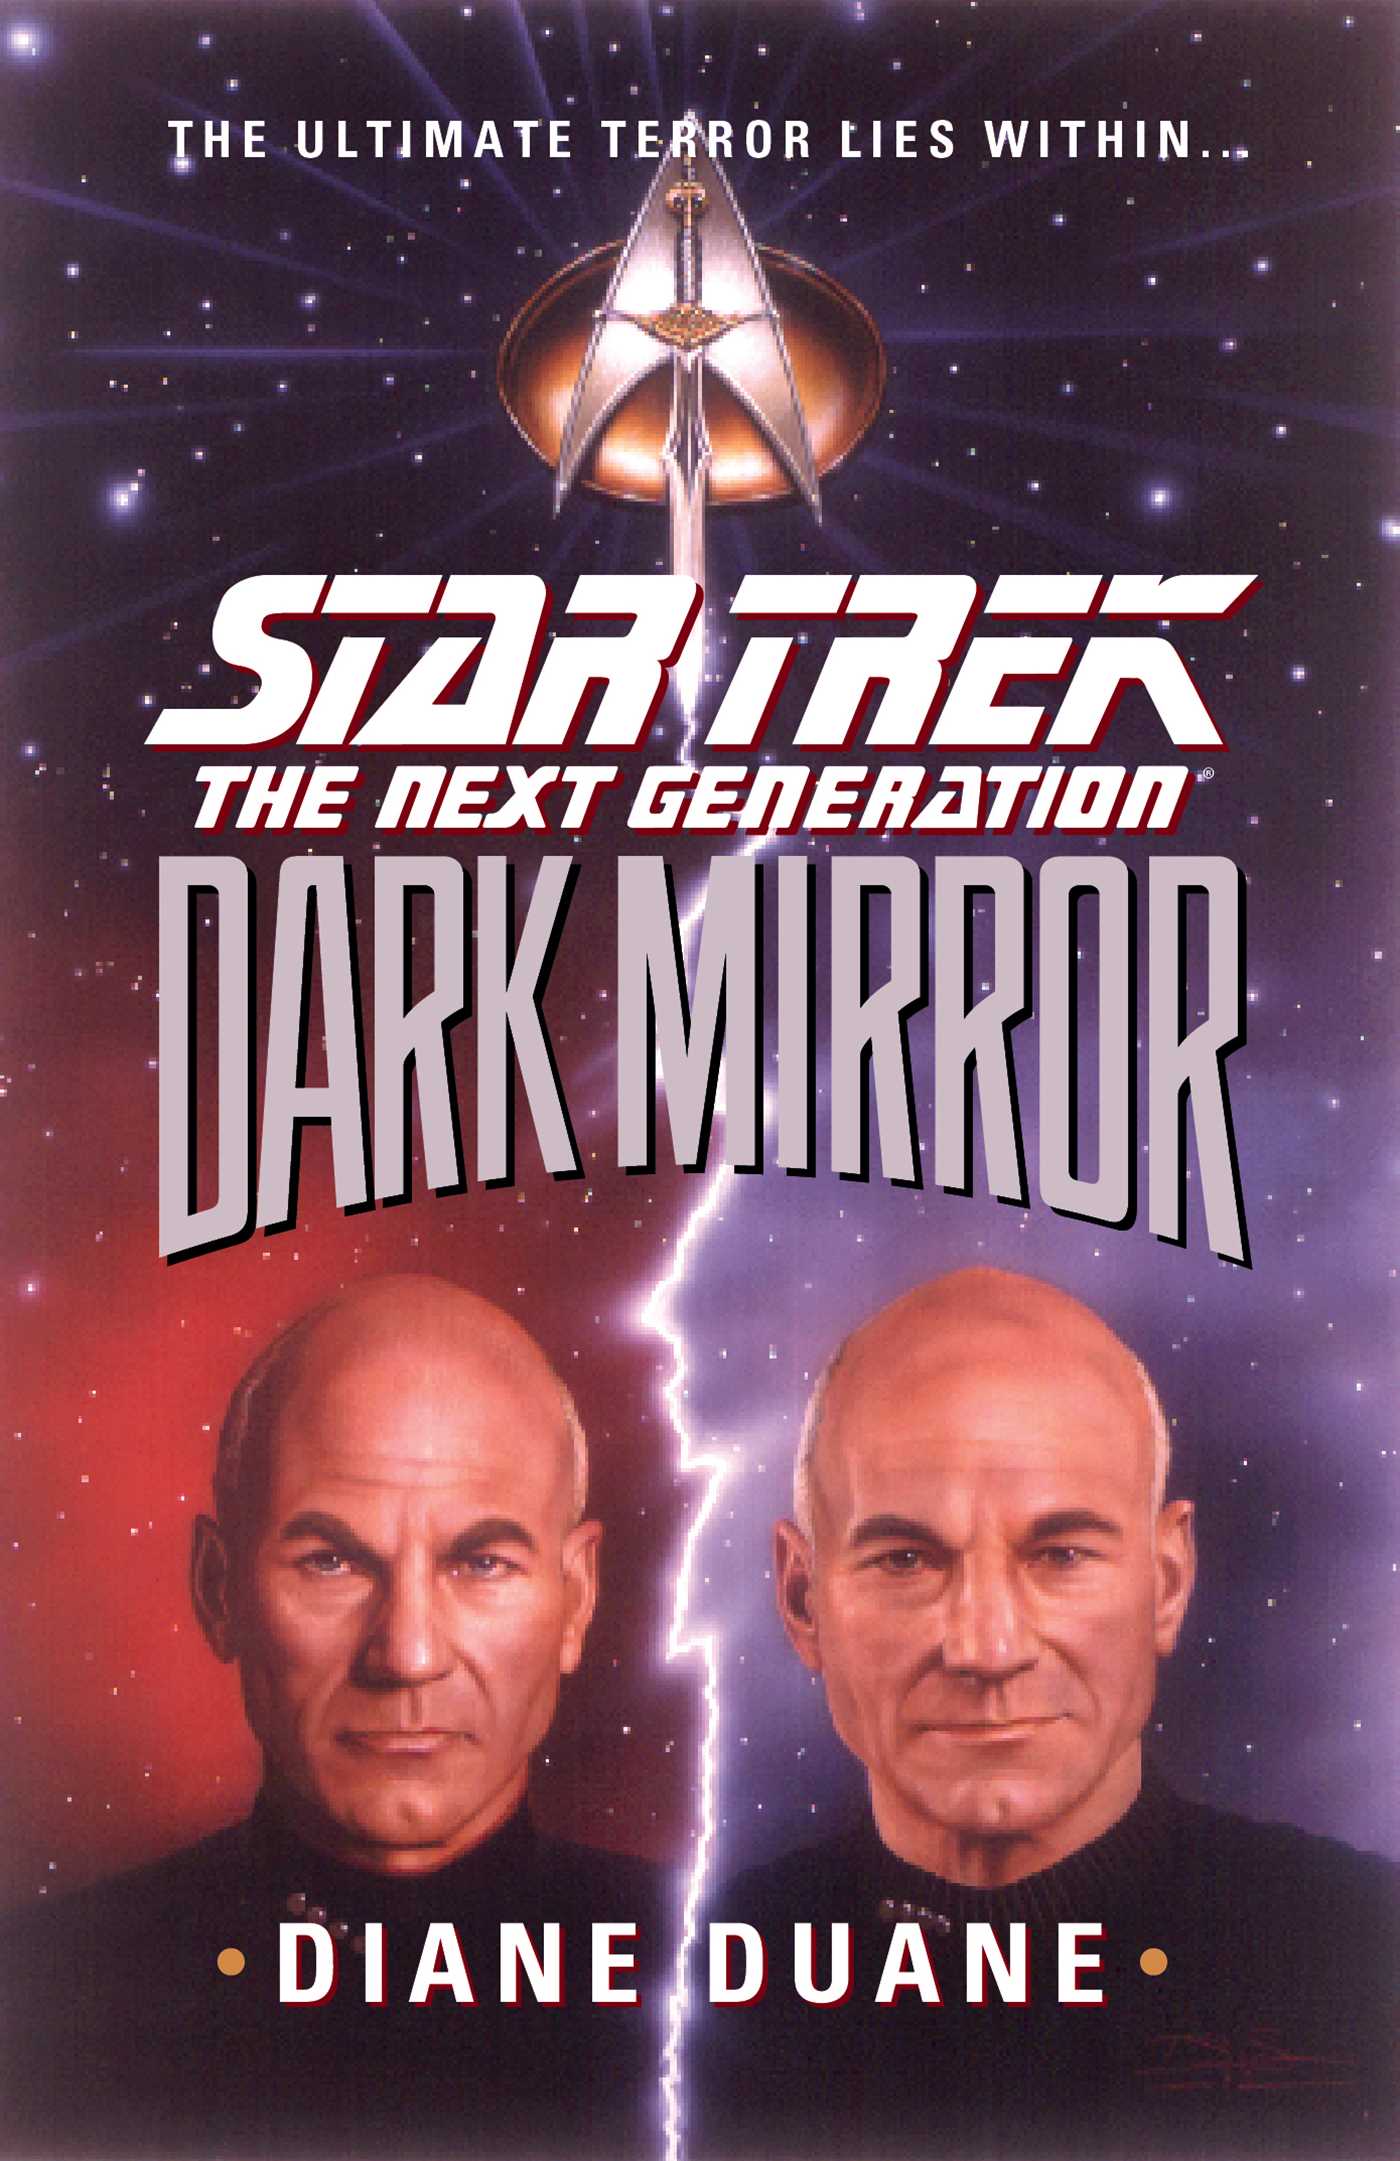 “Star Trek: The Next Generation: Dark Mirror” Review by Blog.trekcore.com